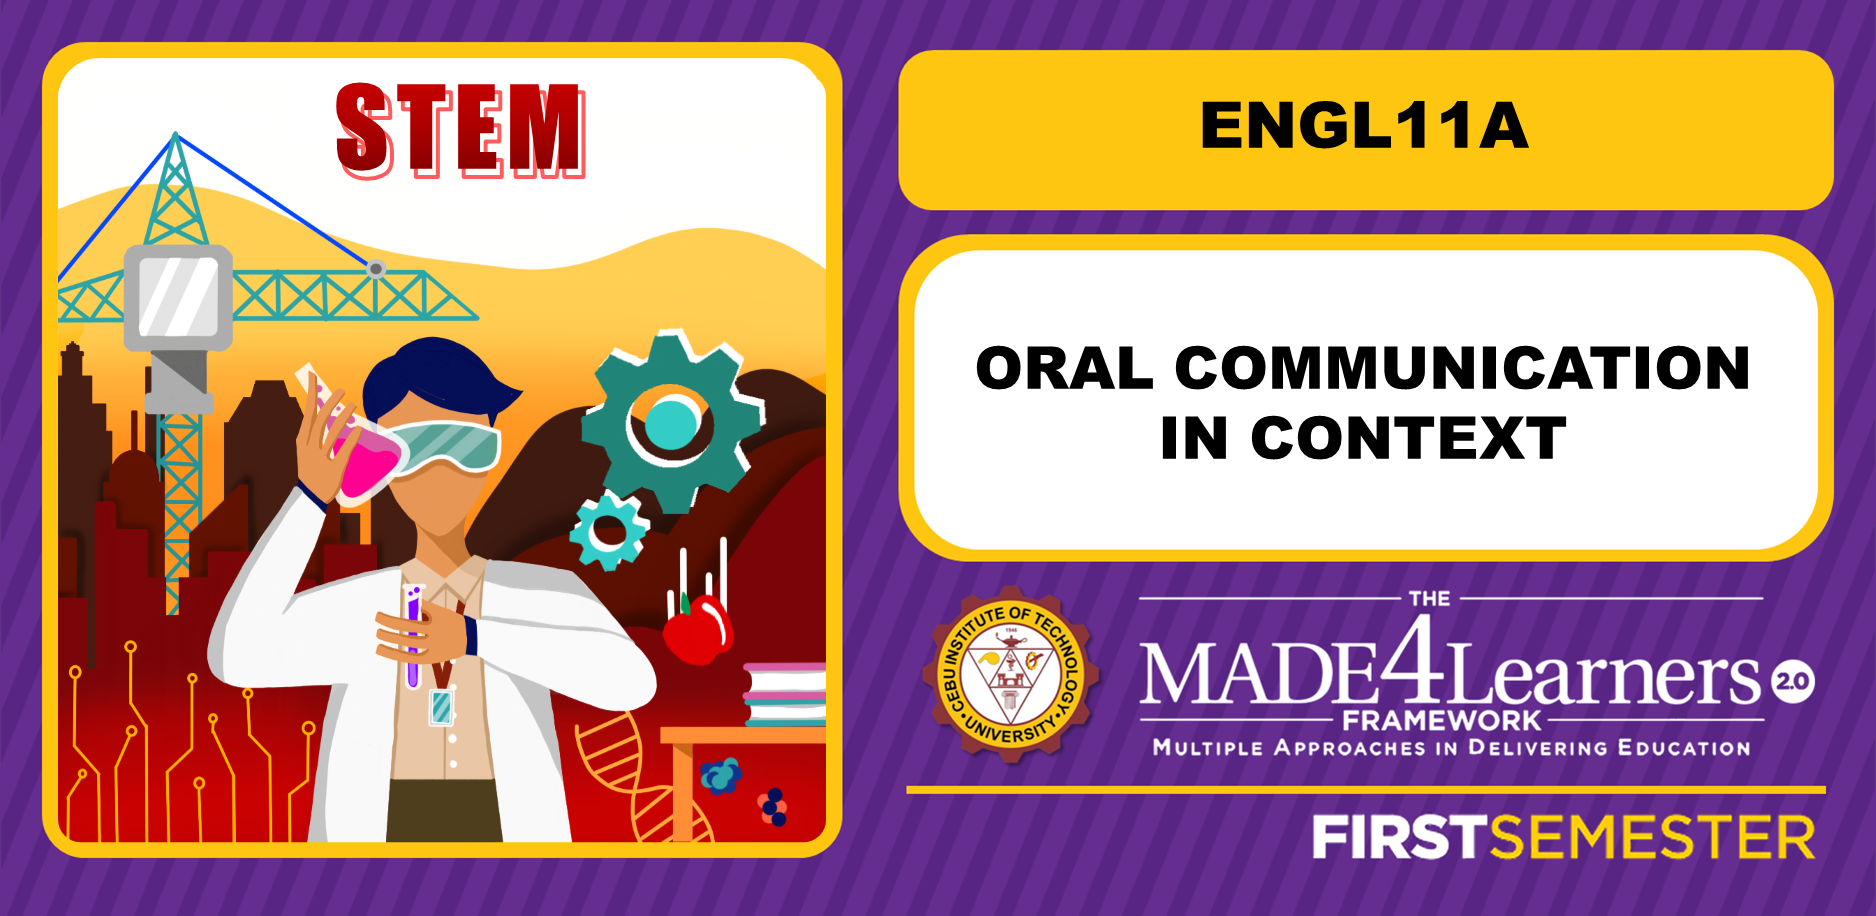 ENGL11A: Oral Communication in Context (Penaranda)